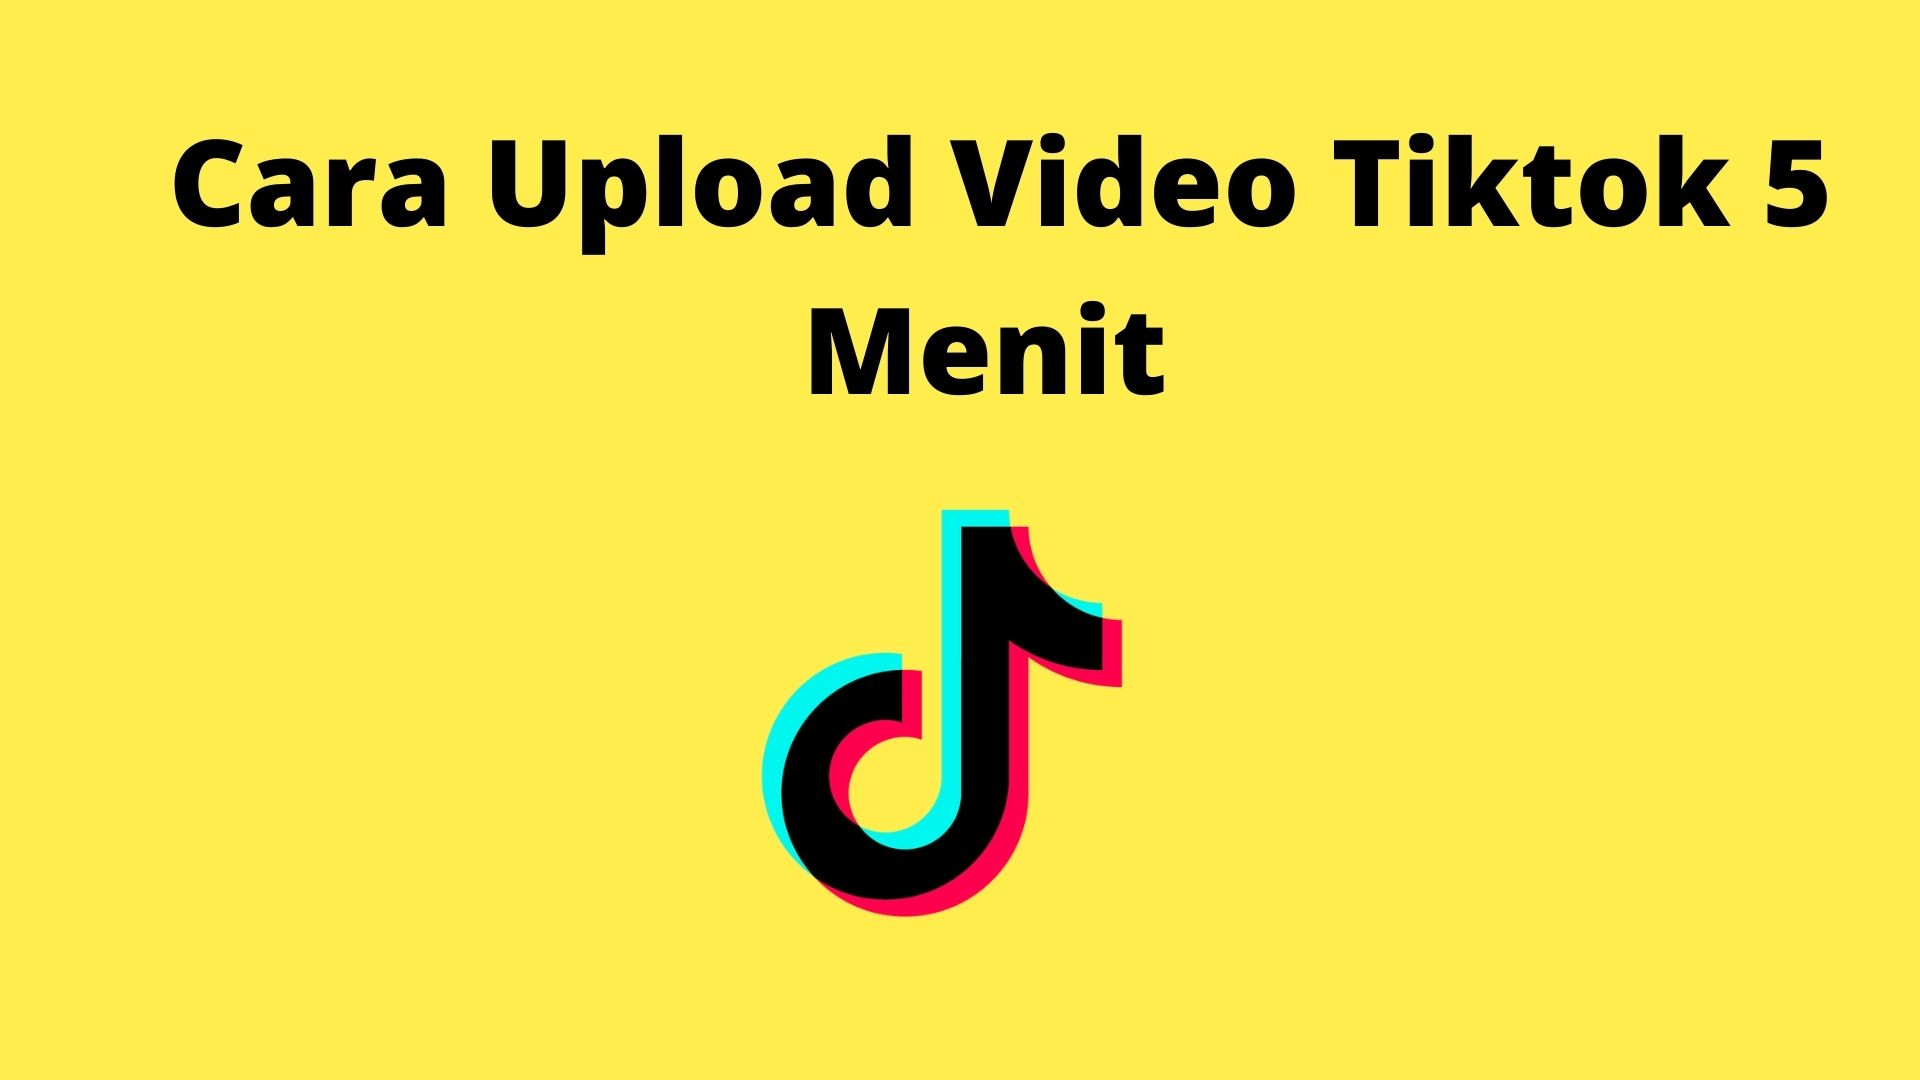 Cara Upload Video Tiktok 5 Menit